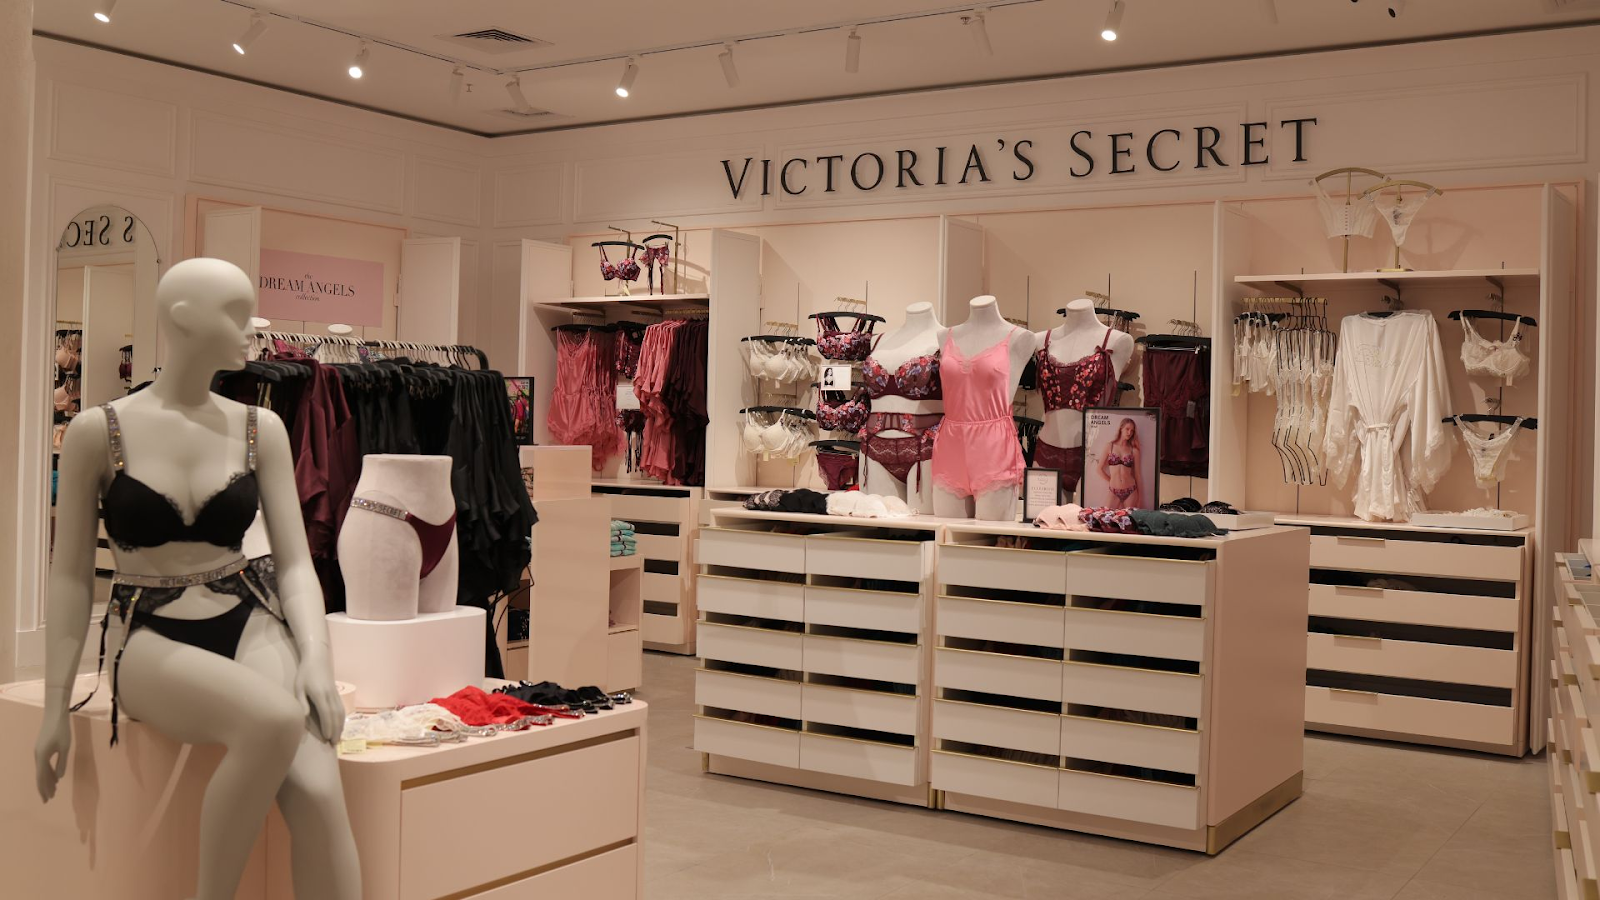 Victoria's Secret: The Ultimate Shopping Destination for Celebrities